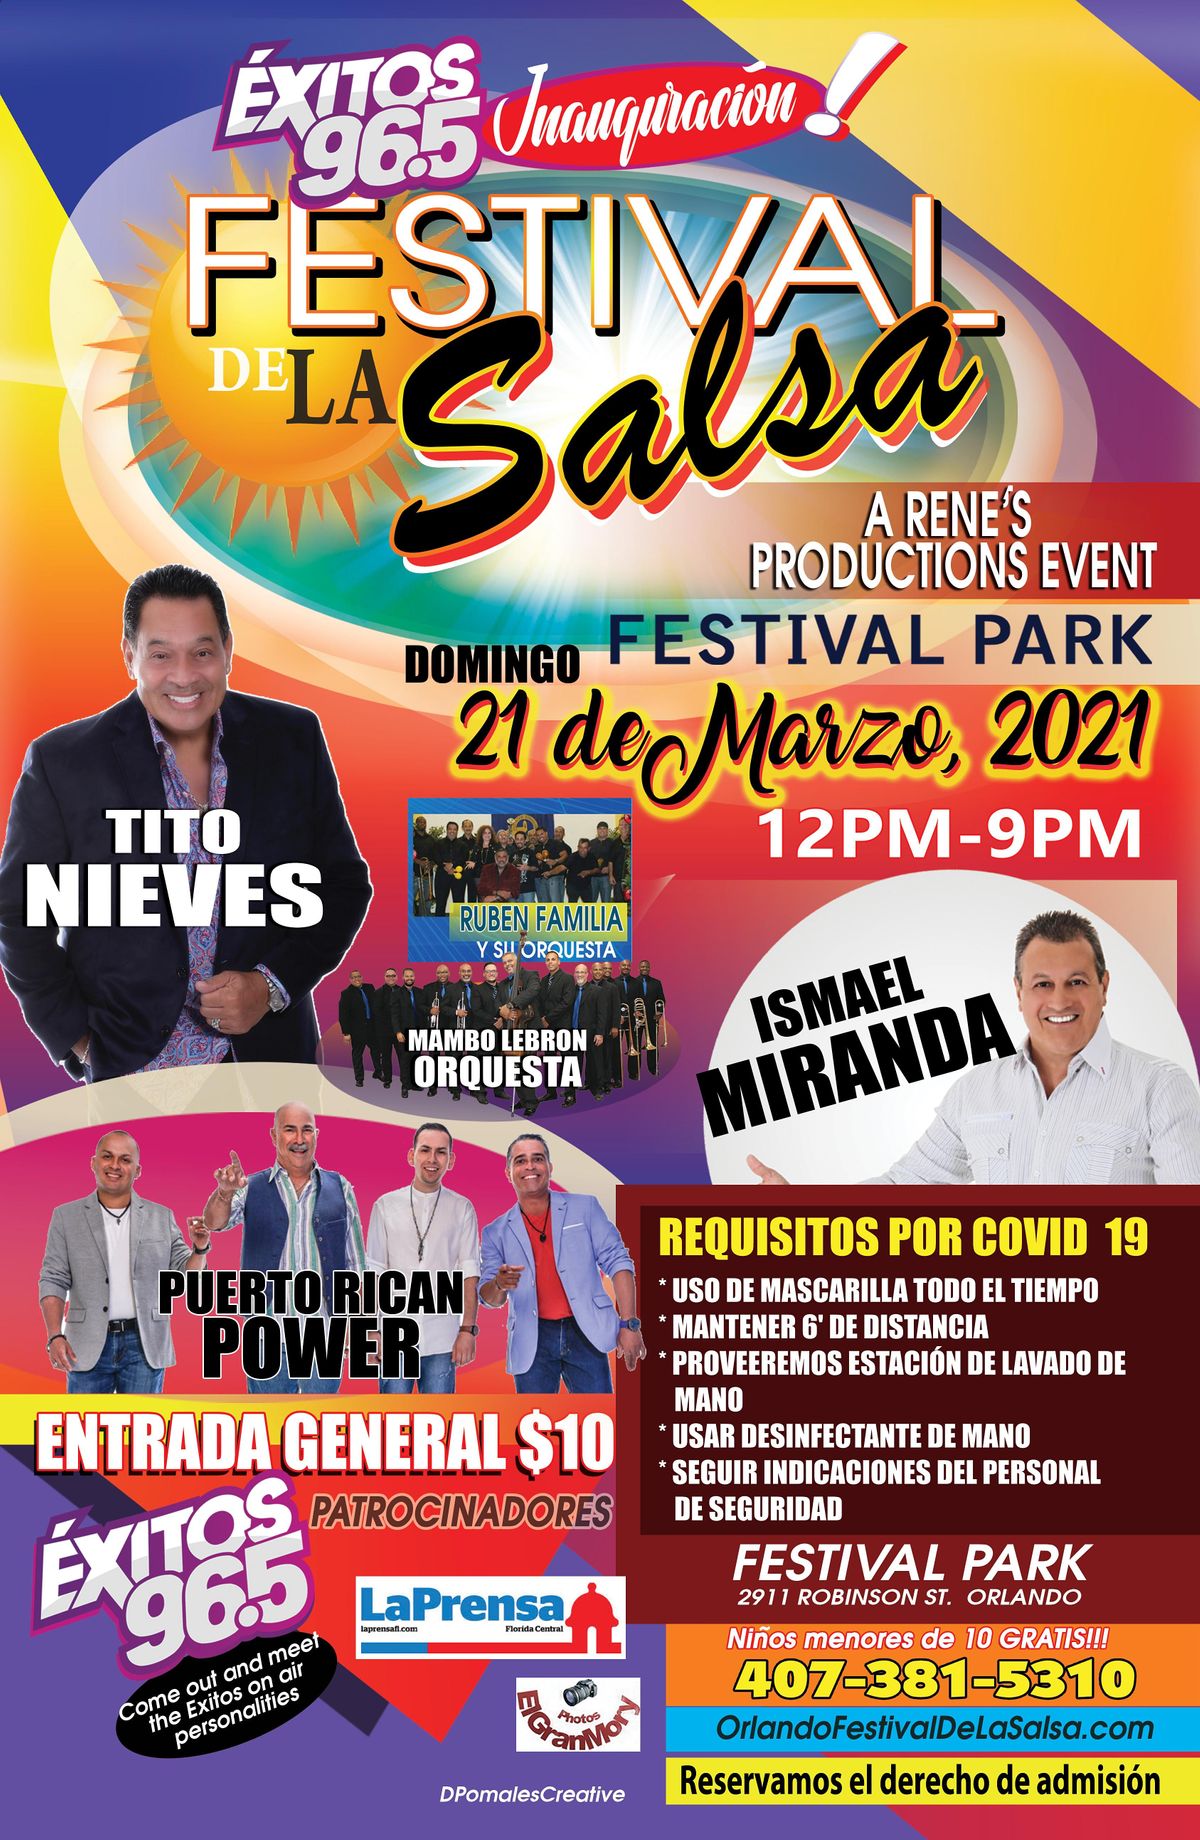 Festival De La Salsa 2021 Tickets AVAILABLE at the event ...